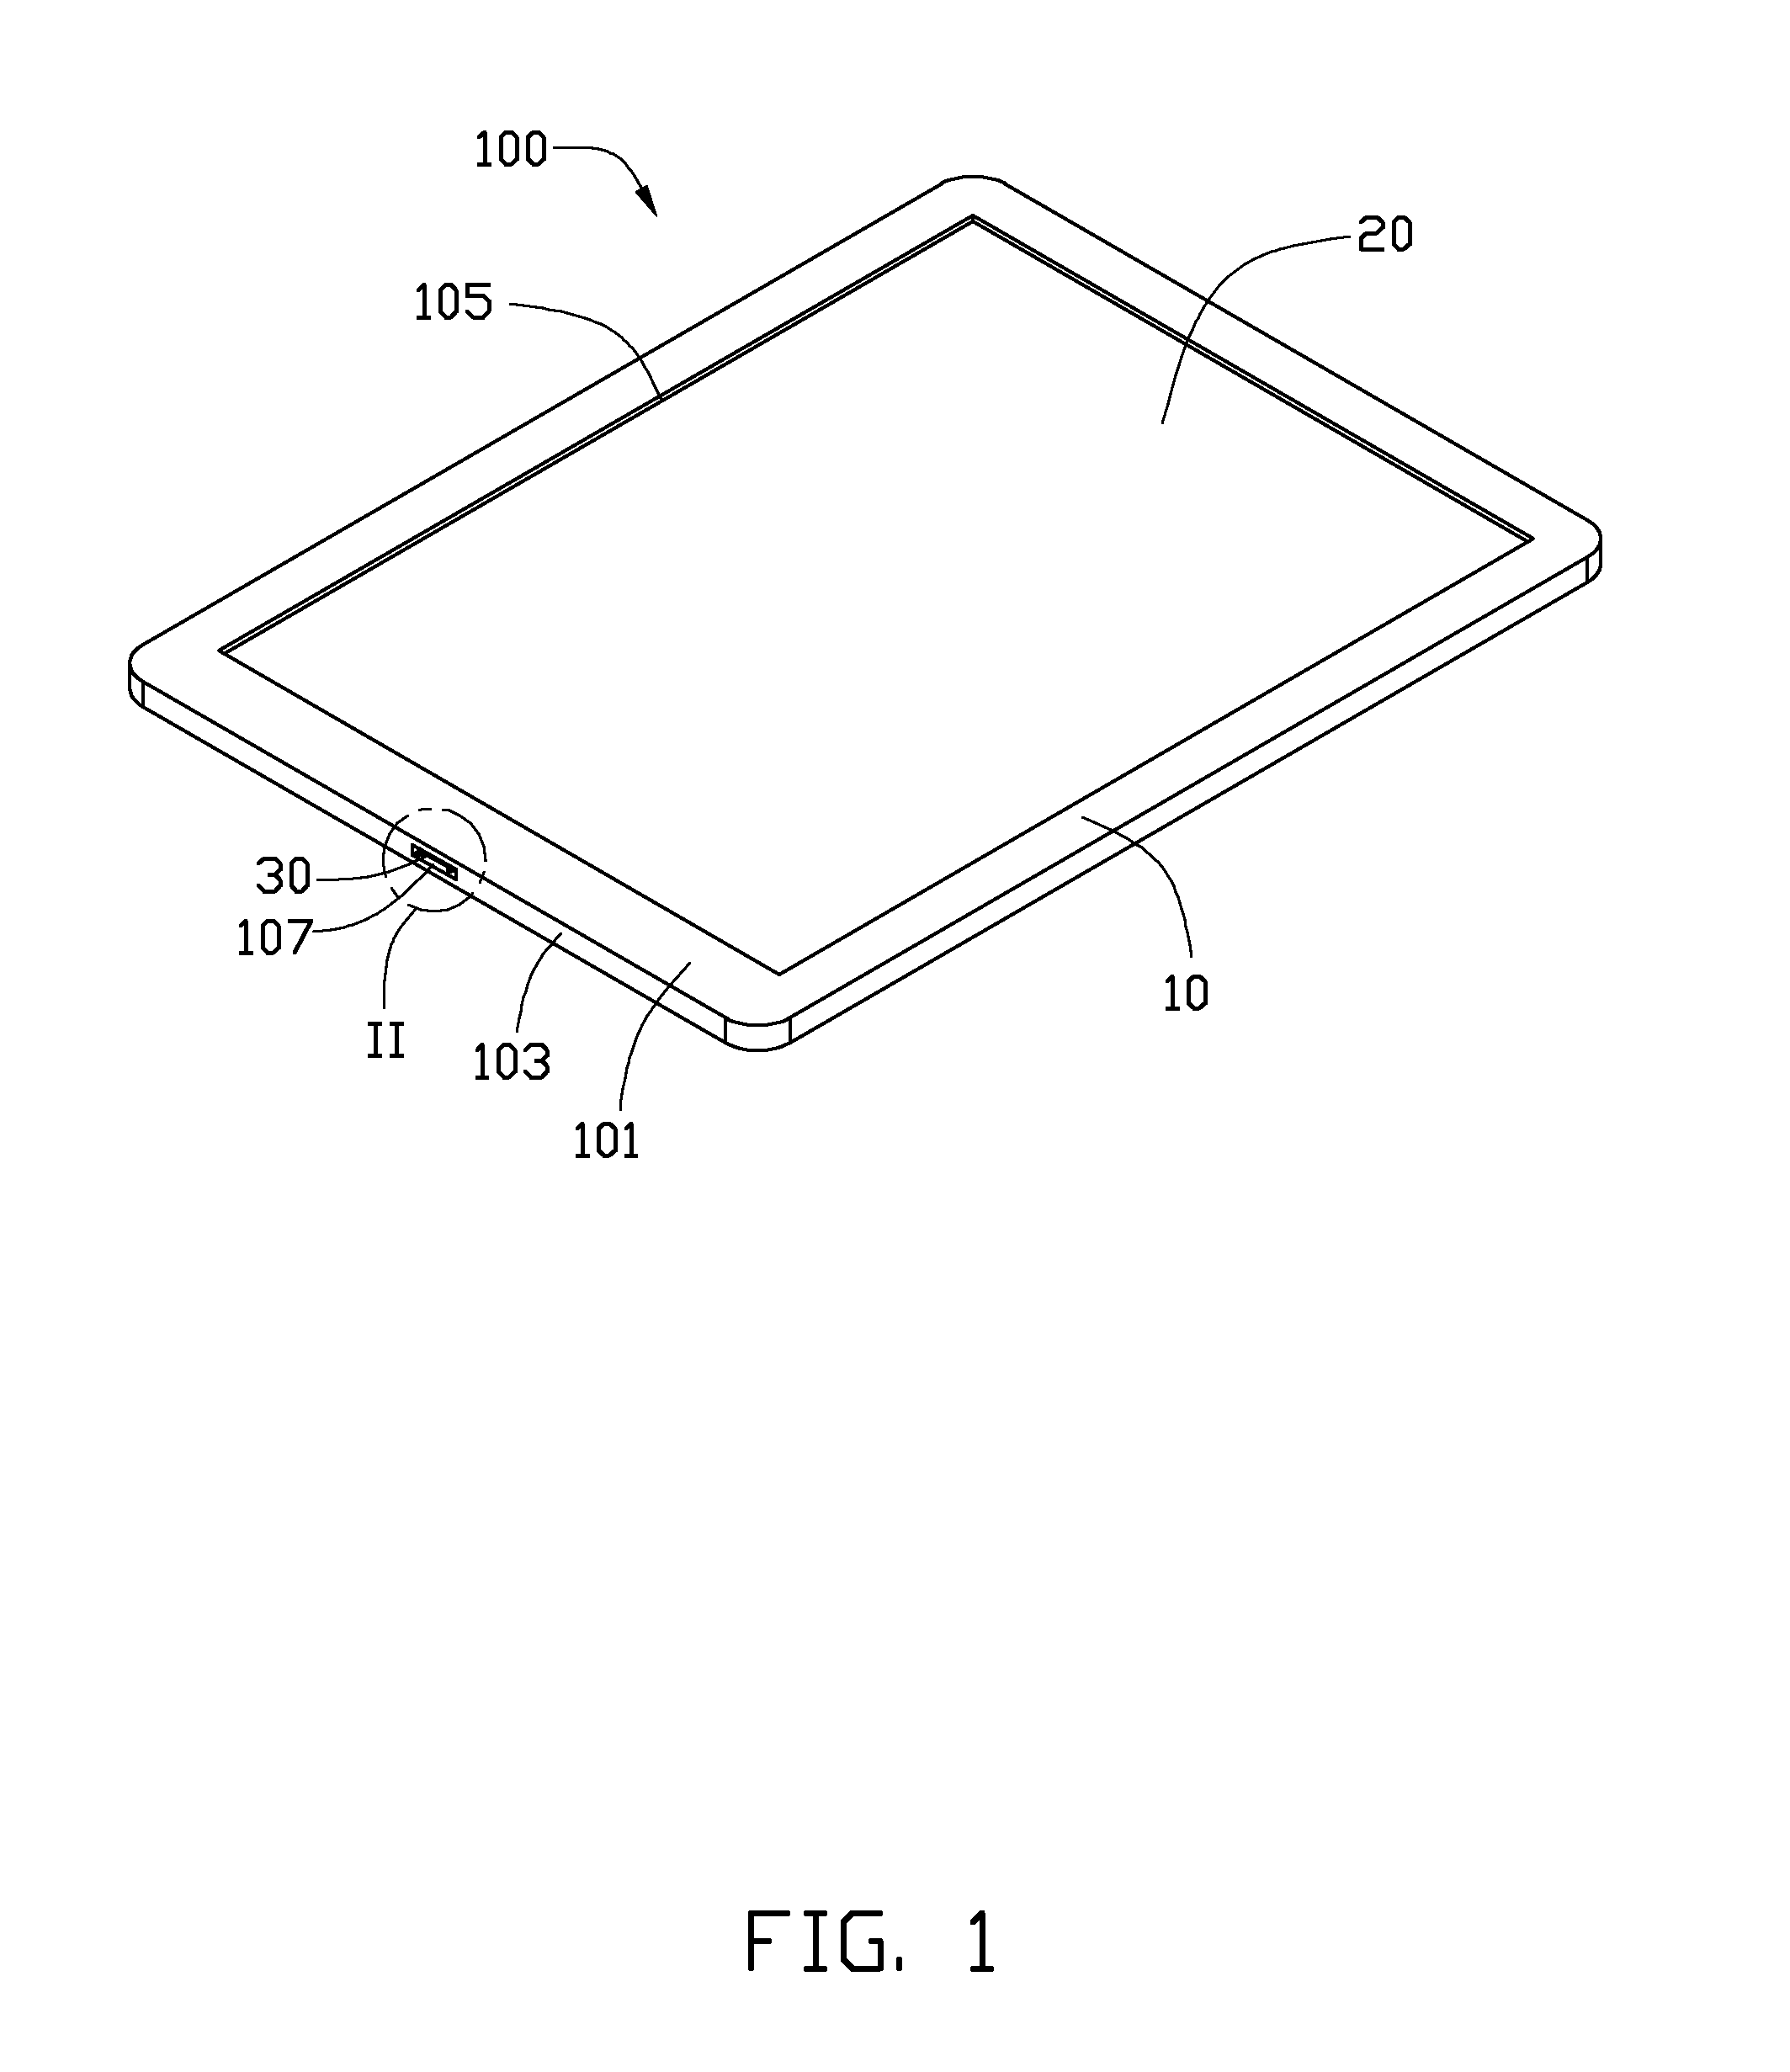 Tablet computer